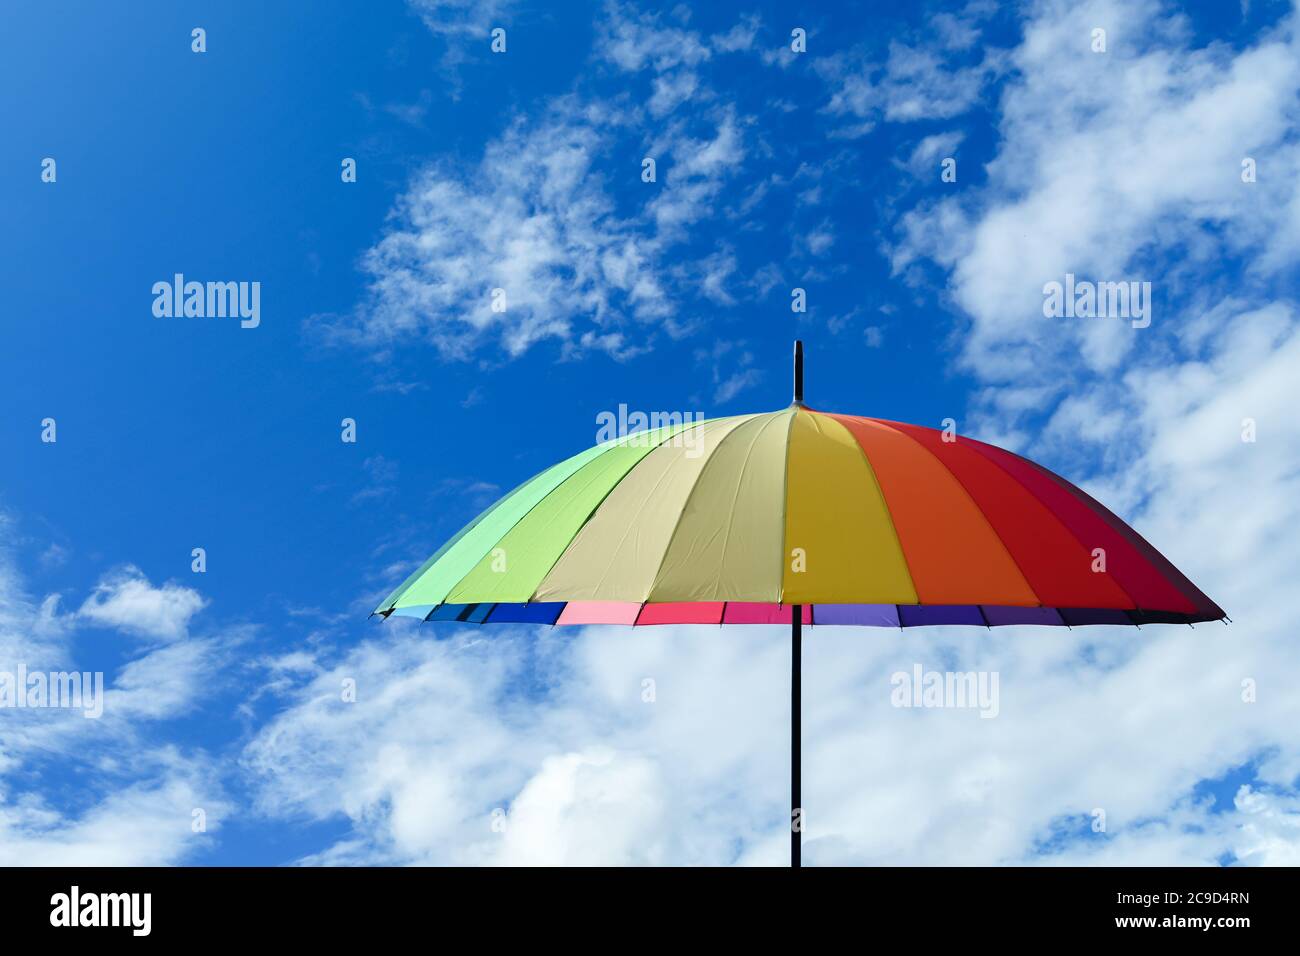 Colorful umbrella multicolored on a blue sky background Stock Photo